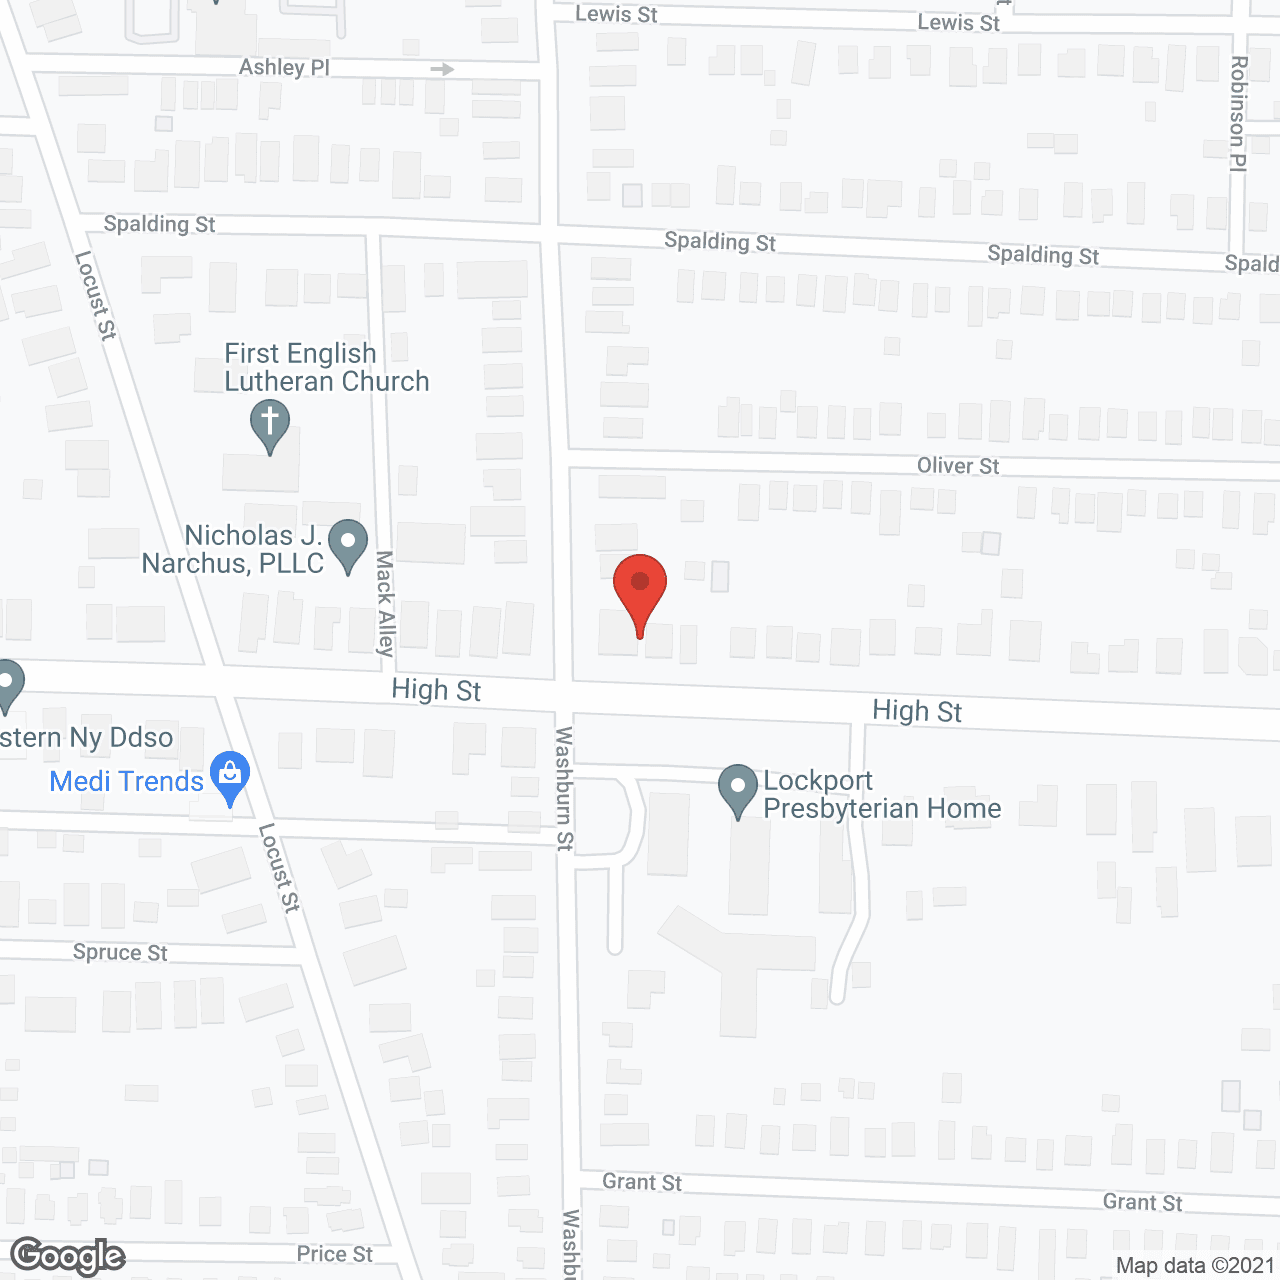 Lockport Presbyterian Home in google map